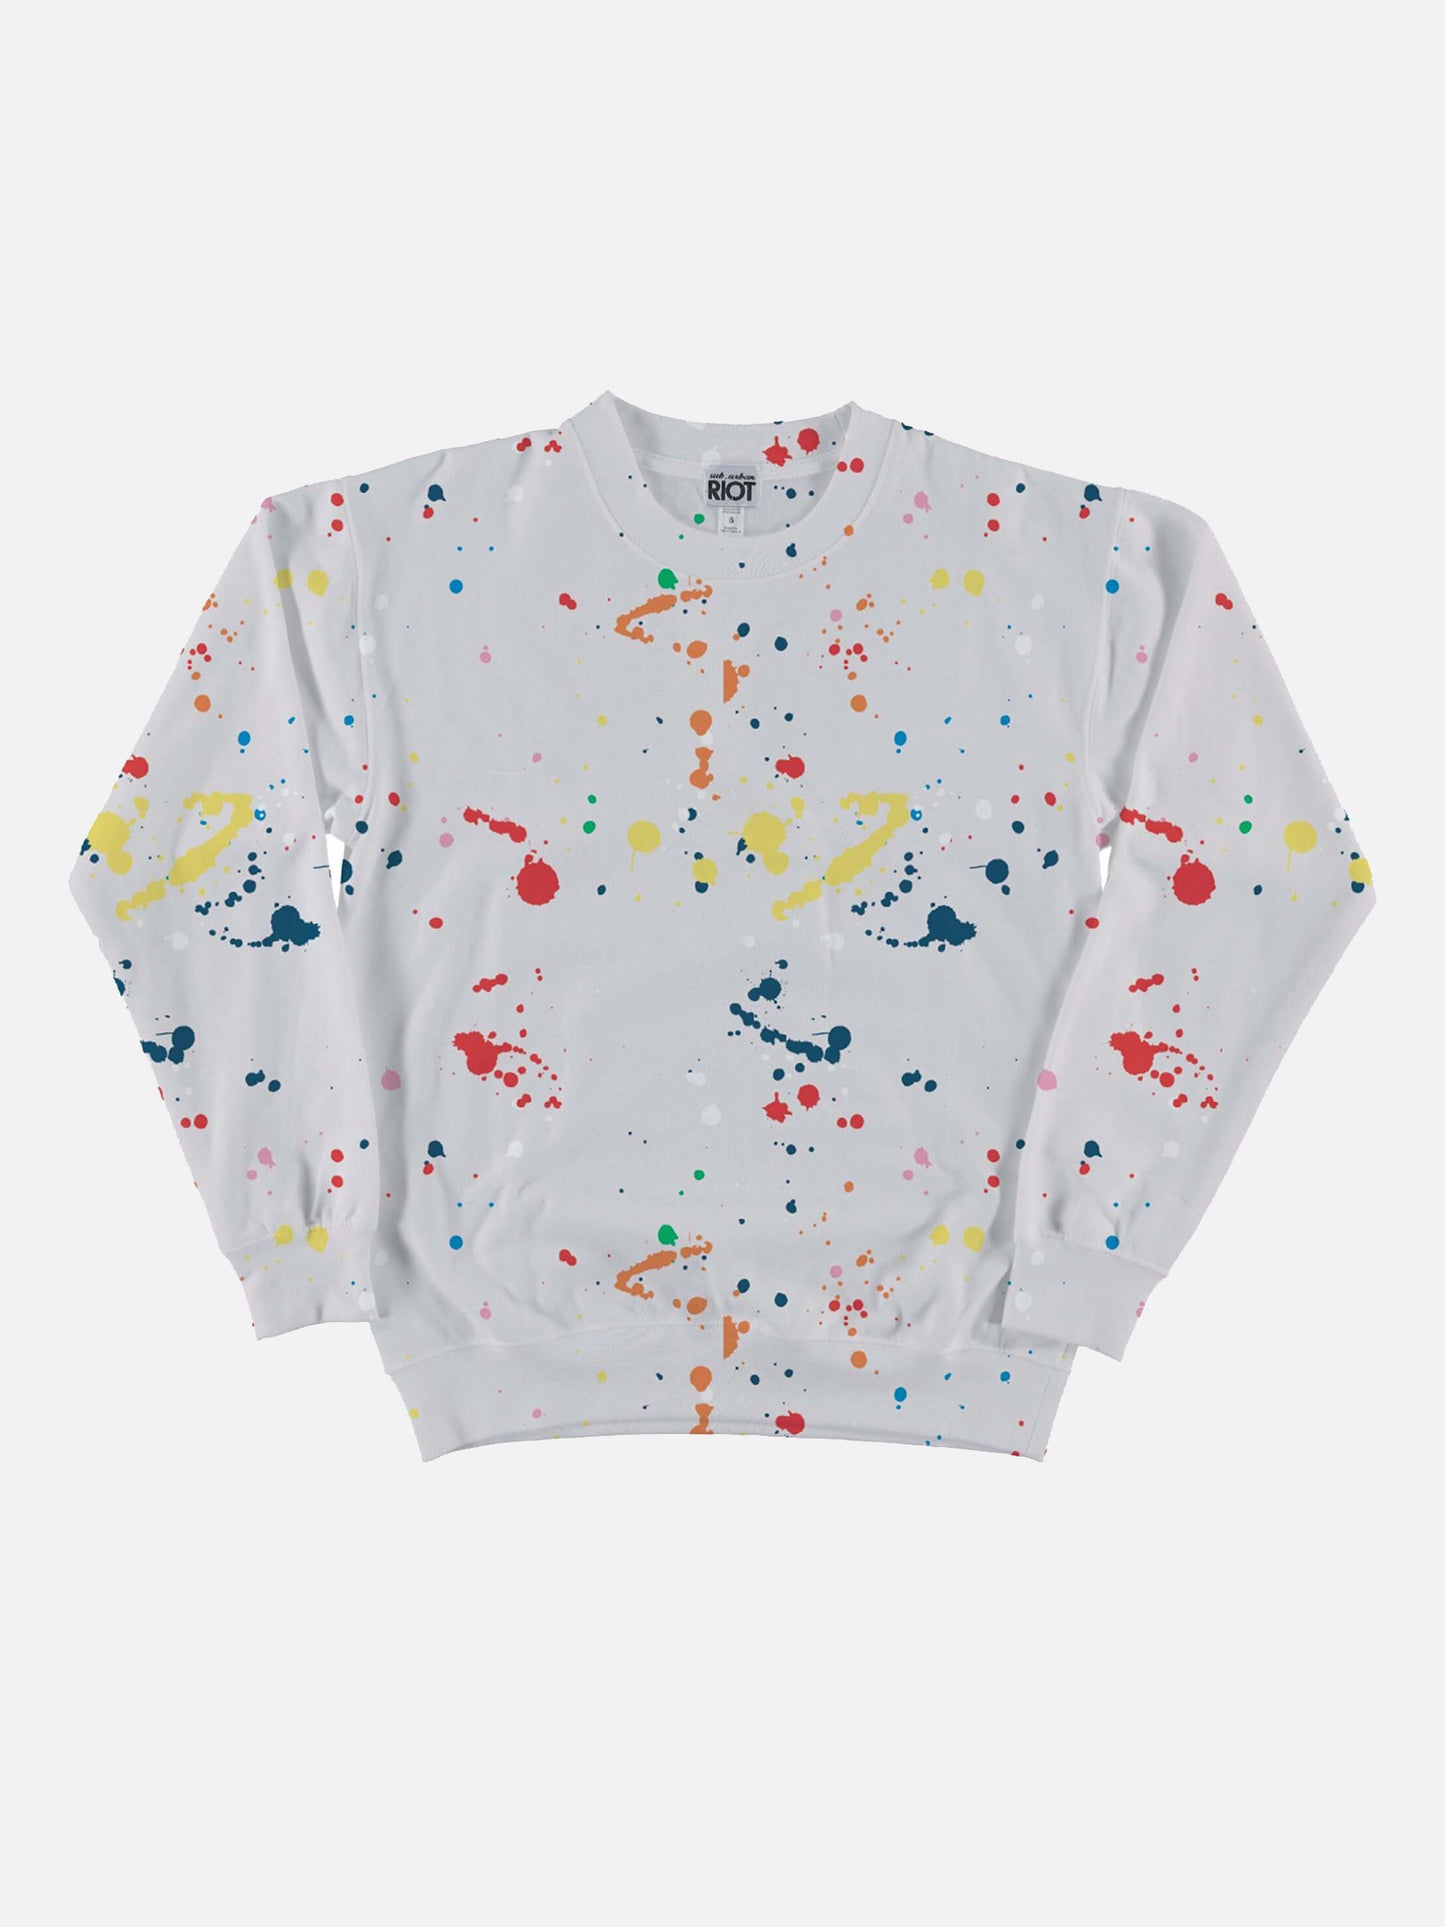 Sub_Urban Riot Girls' Splatter Paint Selena Sweatshirt